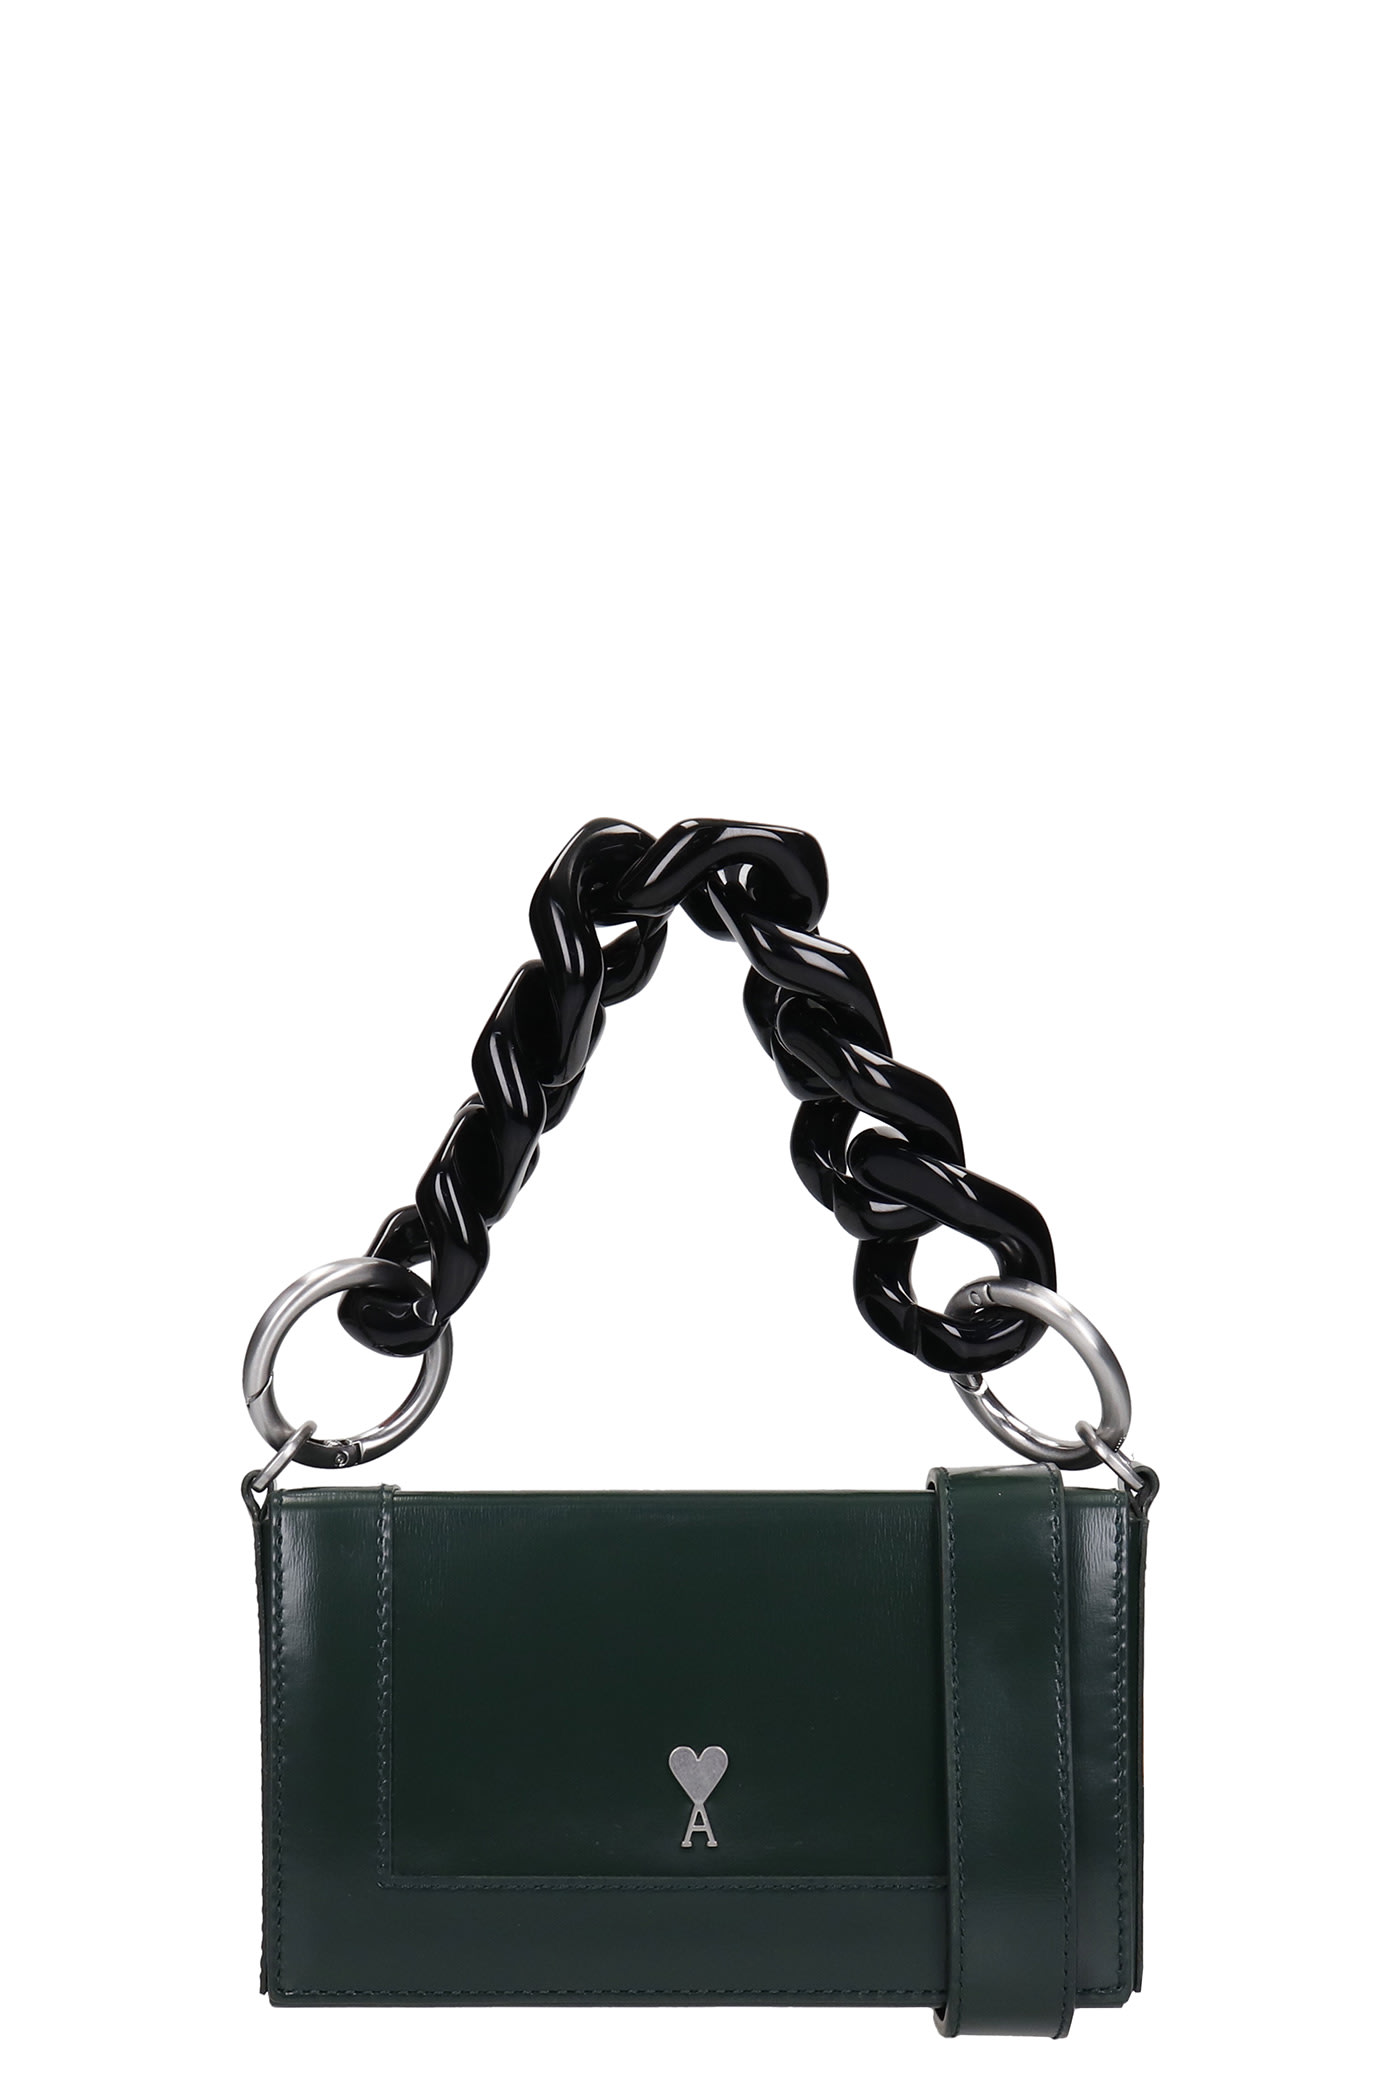 Ami Alexandre Mattiussi Hand Bag In Green Leather